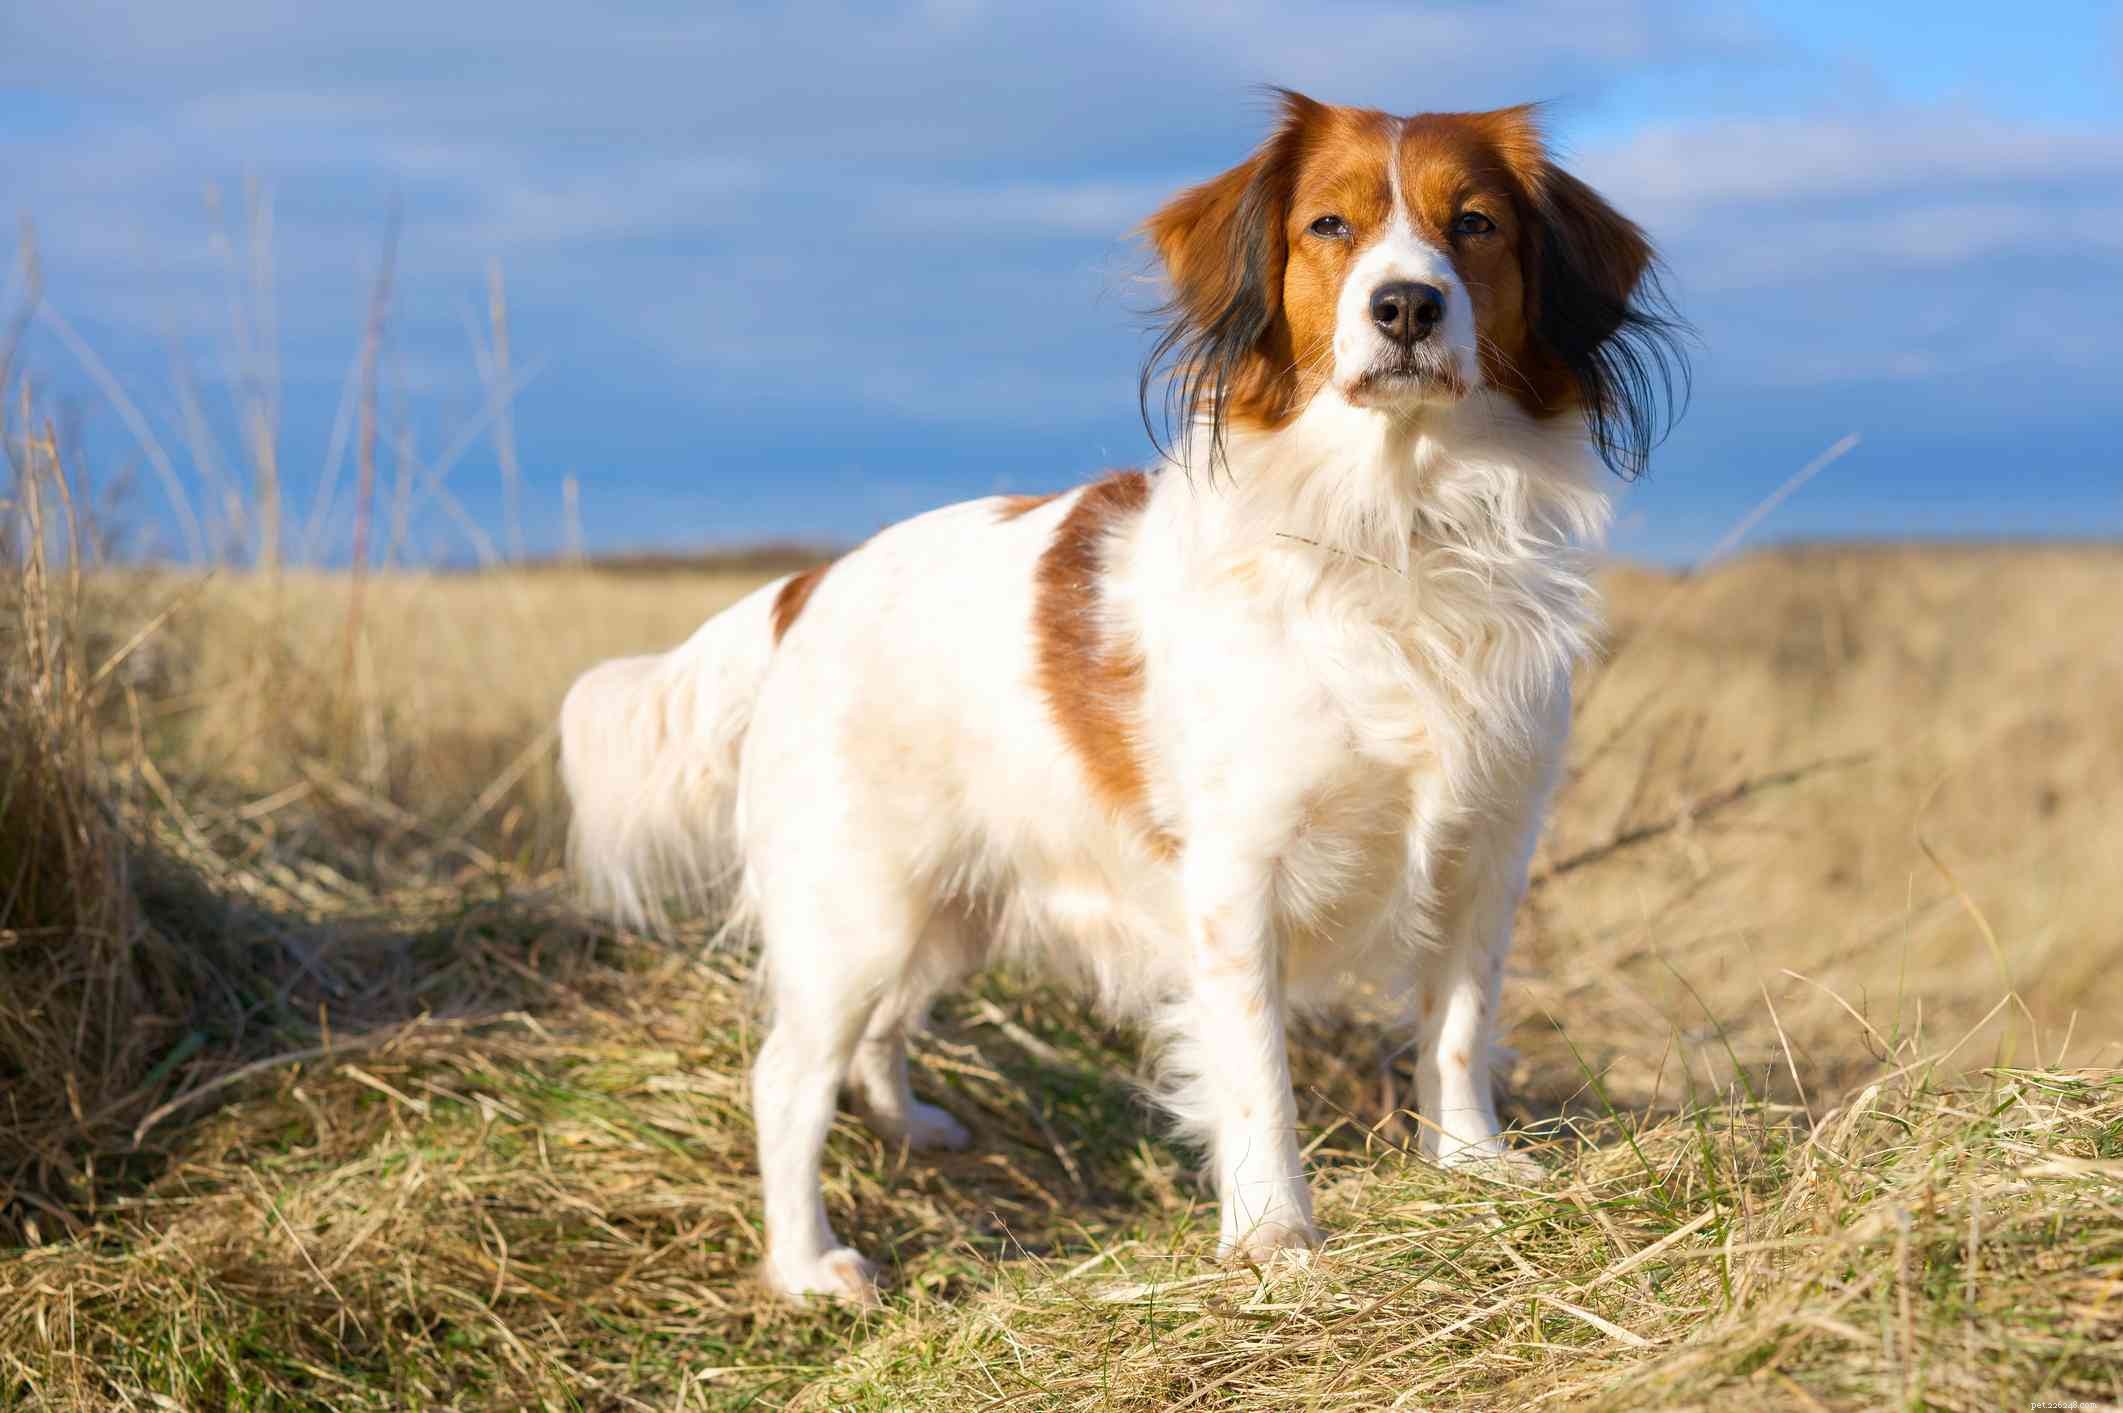 Kooikerhondje (Kooiker) :profil de race de chien